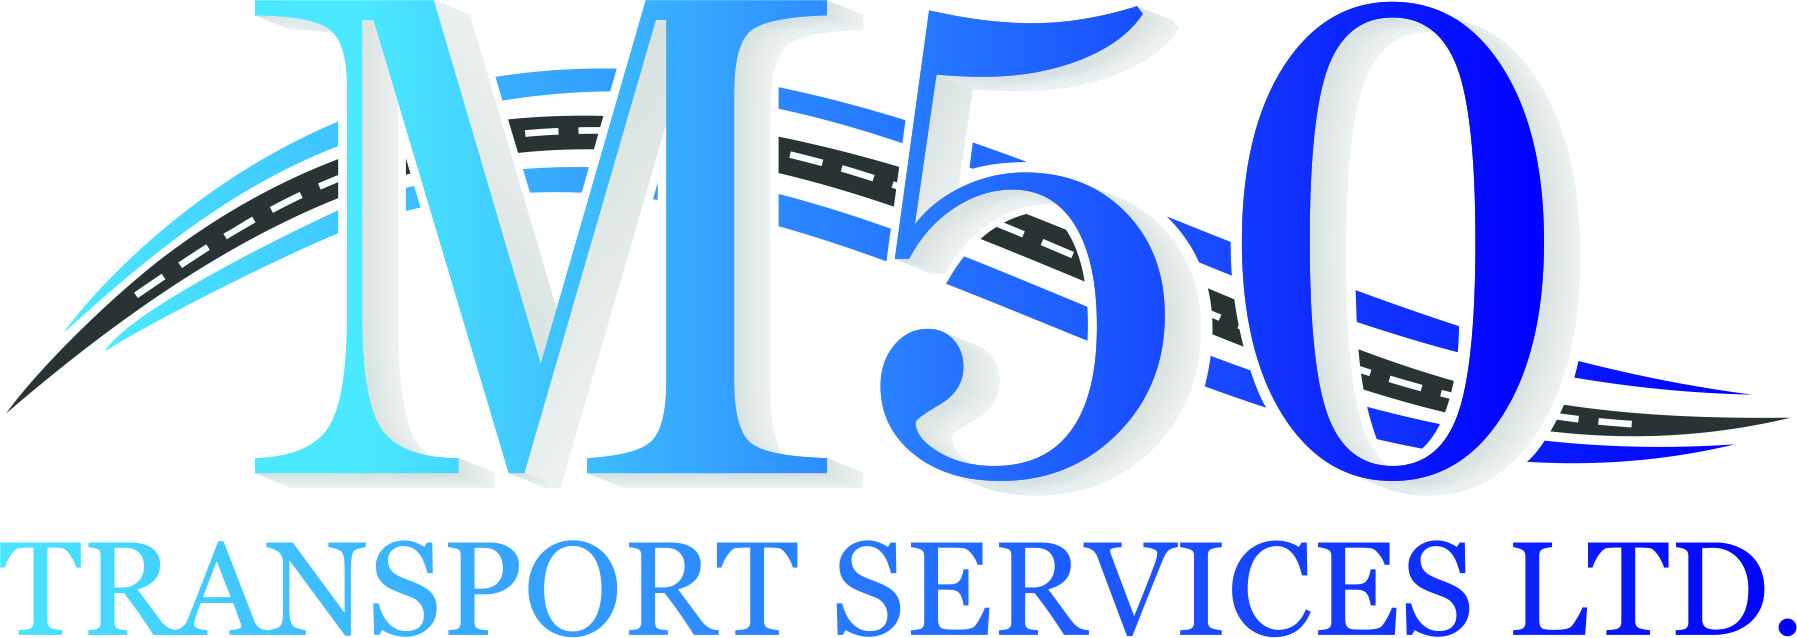 m50-transport-services-logo